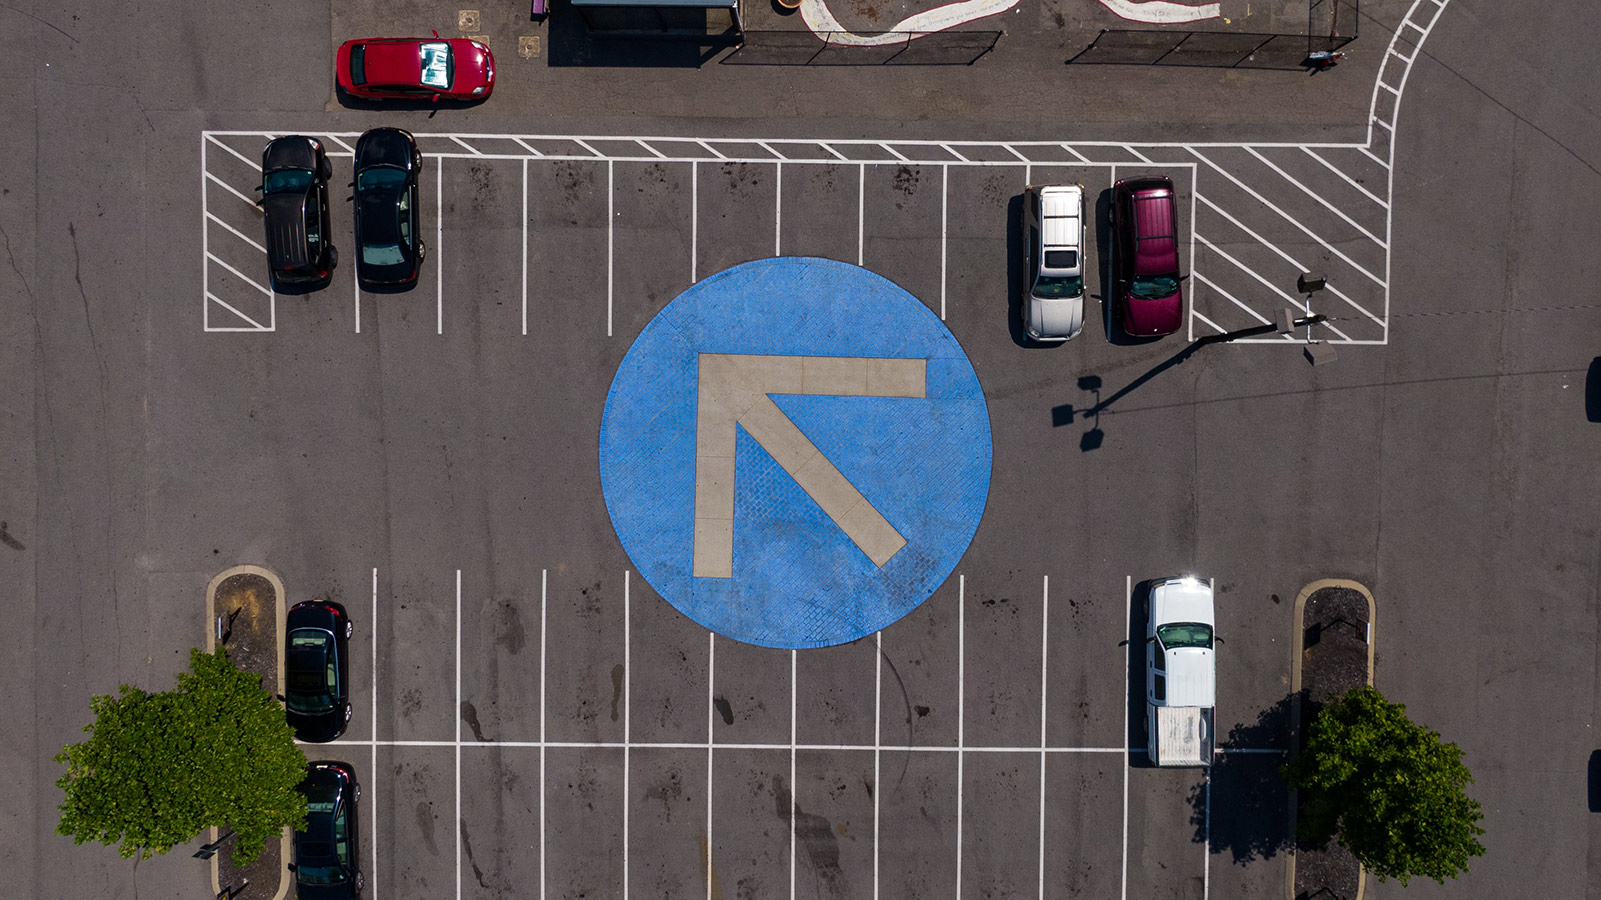 a parking lot